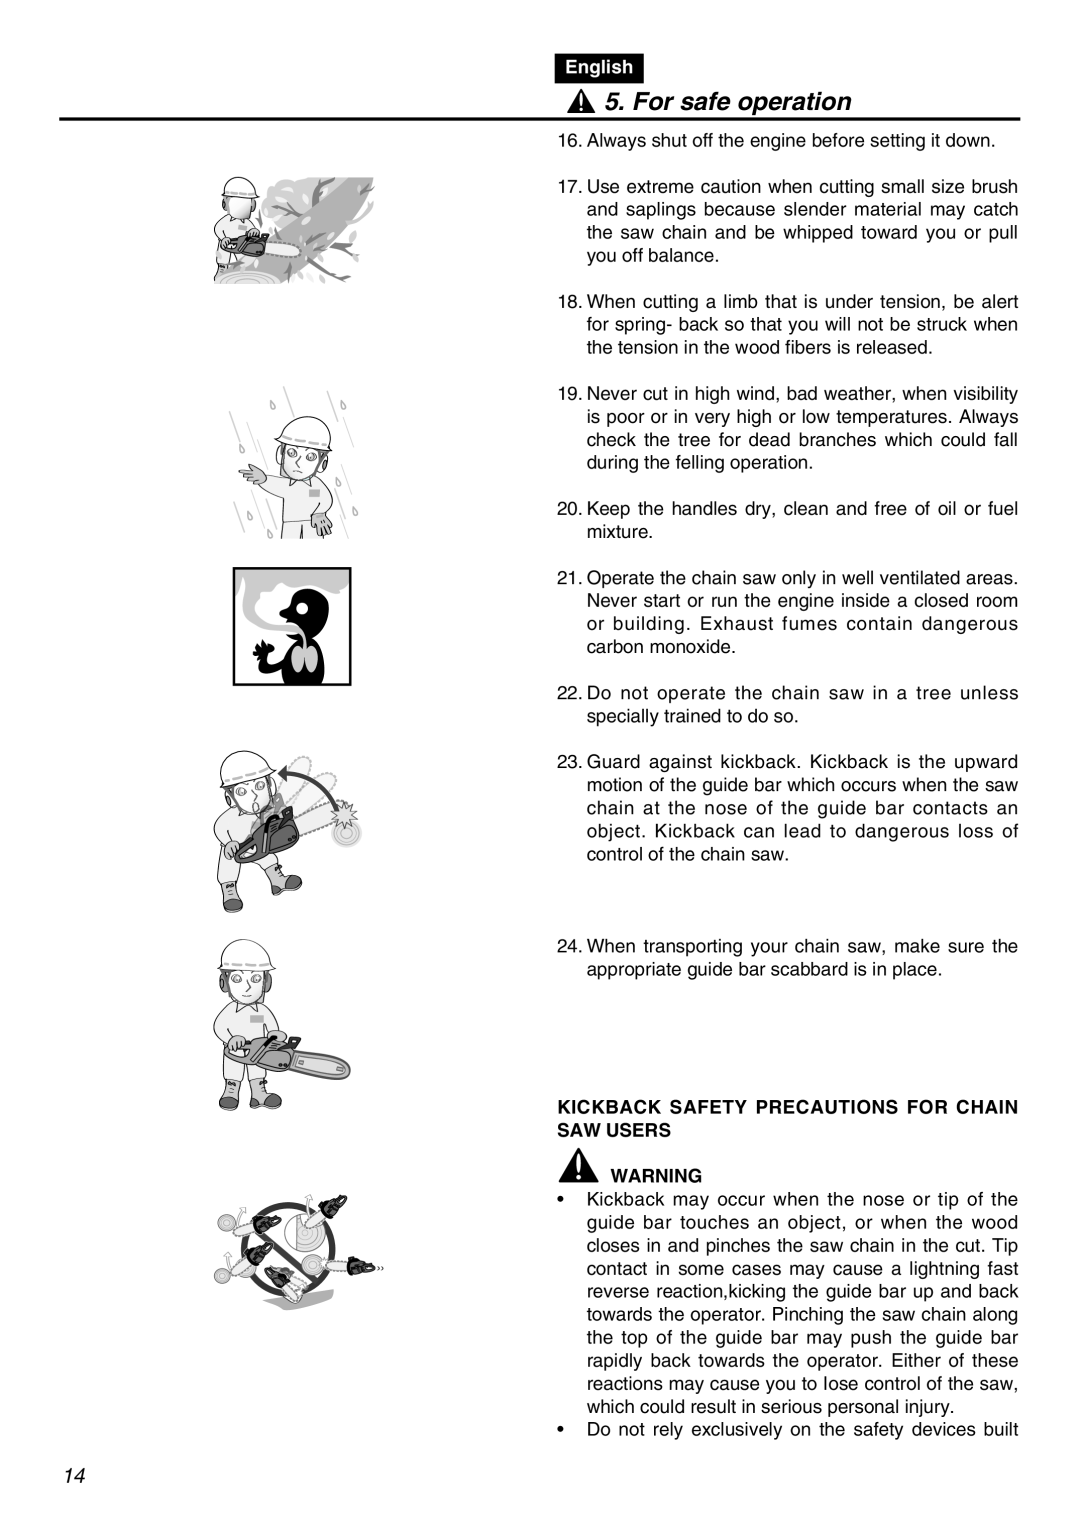 Zenoah G3800AVS manual For safe operation, English, Kickback Safety Precautions For Chain Saw Users 